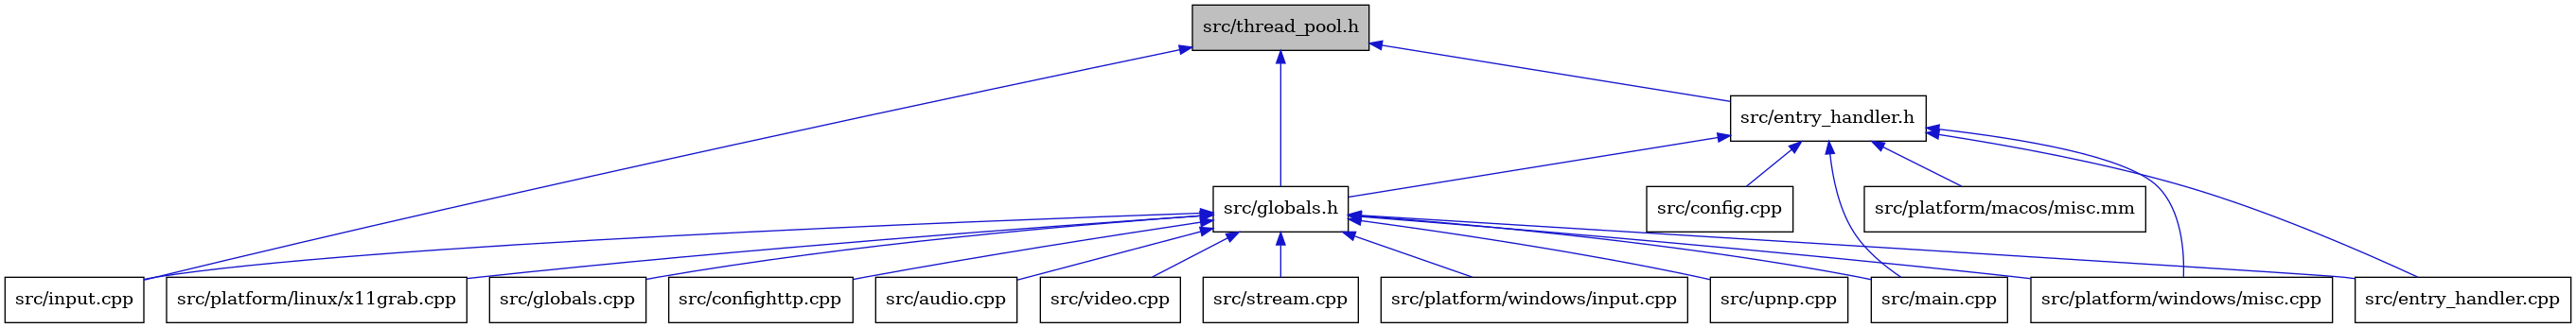 digraph {
    graph [bgcolor="#00000000"]
    node [shape=rectangle style=filled fillcolor="#FFFFFF" font=Helvetica padding=2]
    edge [color="#1414CE"]
    "5" [label="src/globals.h" tooltip="src/globals.h"]
    "14" [label="src/stream.cpp" tooltip="src/stream.cpp"]
    "4" [label="src/entry_handler.cpp" tooltip="src/entry_handler.cpp"]
    "12" [label="src/platform/windows/input.cpp" tooltip="src/platform/windows/input.cpp"]
    "15" [label="src/upnp.cpp" tooltip="src/upnp.cpp"]
    "9" [label="src/input.cpp" tooltip="src/input.cpp"]
    "11" [label="src/platform/linux/x11grab.cpp" tooltip="src/platform/linux/x11grab.cpp"]
    "3" [label="src/config.cpp" tooltip="src/config.cpp"]
    "8" [label="src/globals.cpp" tooltip="src/globals.cpp"]
    "10" [label="src/main.cpp" tooltip="src/main.cpp"]
    "2" [label="src/entry_handler.h" tooltip="src/entry_handler.h"]
    "17" [label="src/platform/macos/misc.mm" tooltip="src/platform/macos/misc.mm"]
    "13" [label="src/platform/windows/misc.cpp" tooltip="src/platform/windows/misc.cpp"]
    "7" [label="src/confighttp.cpp" tooltip="src/confighttp.cpp"]
    "1" [label="src/thread_pool.h" tooltip="src/thread_pool.h" fillcolor="#BFBFBF"]
    "6" [label="src/audio.cpp" tooltip="src/audio.cpp"]
    "16" [label="src/video.cpp" tooltip="src/video.cpp"]
    "5" -> "6" [dir=back tooltip="include"]
    "5" -> "7" [dir=back tooltip="include"]
    "5" -> "4" [dir=back tooltip="include"]
    "5" -> "8" [dir=back tooltip="include"]
    "5" -> "9" [dir=back tooltip="include"]
    "5" -> "10" [dir=back tooltip="include"]
    "5" -> "11" [dir=back tooltip="include"]
    "5" -> "12" [dir=back tooltip="include"]
    "5" -> "13" [dir=back tooltip="include"]
    "5" -> "14" [dir=back tooltip="include"]
    "5" -> "15" [dir=back tooltip="include"]
    "5" -> "16" [dir=back tooltip="include"]
    "2" -> "3" [dir=back tooltip="include"]
    "2" -> "4" [dir=back tooltip="include"]
    "2" -> "5" [dir=back tooltip="include"]
    "2" -> "10" [dir=back tooltip="include"]
    "2" -> "17" [dir=back tooltip="include"]
    "2" -> "13" [dir=back tooltip="include"]
    "1" -> "2" [dir=back tooltip="include"]
    "1" -> "5" [dir=back tooltip="include"]
    "1" -> "9" [dir=back tooltip="include"]
}